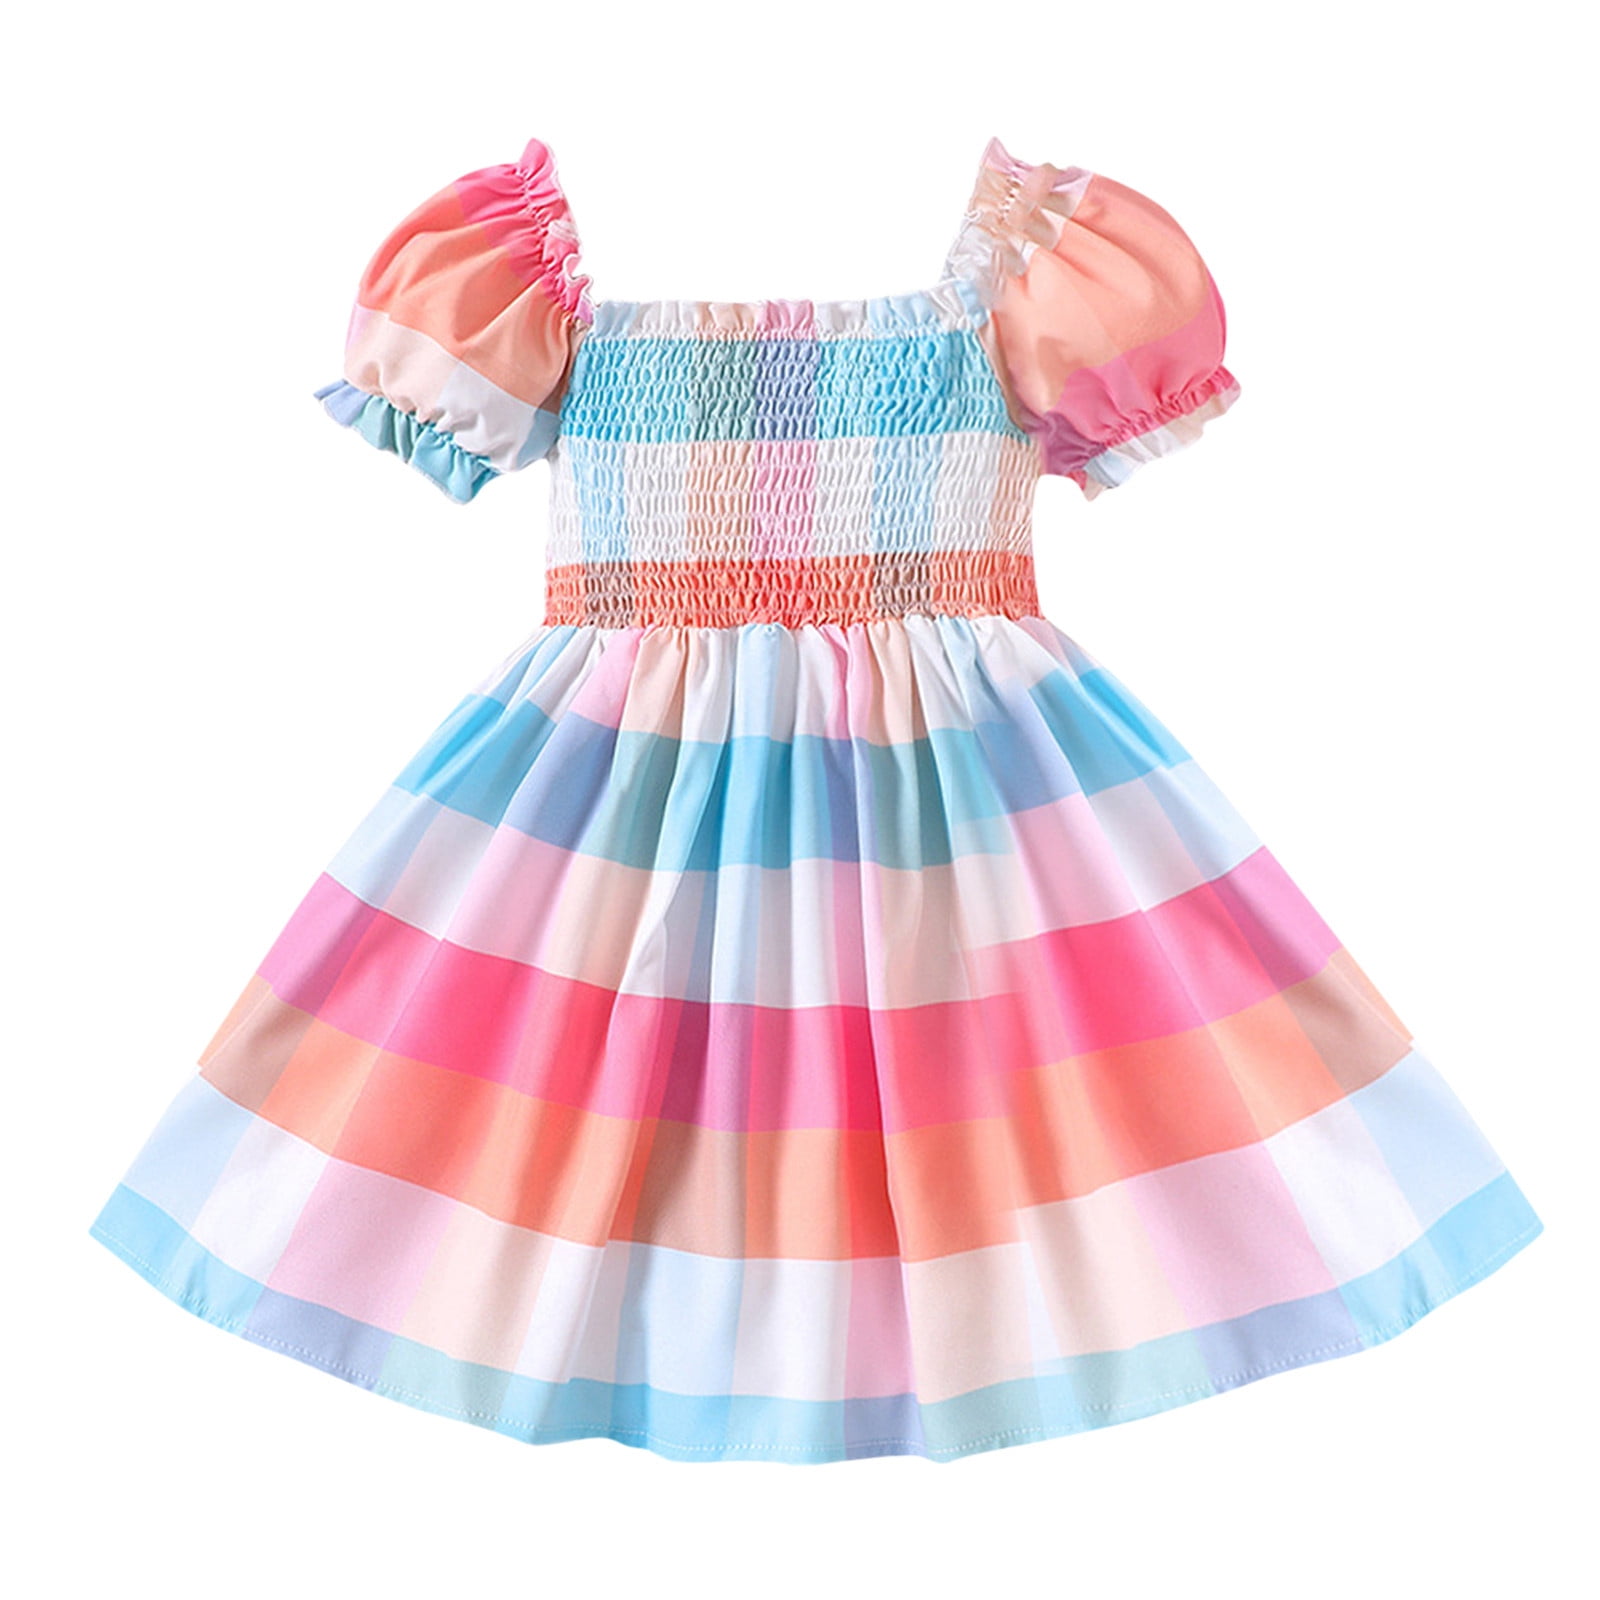 adviicd Kids Summer Dresses for Girls Girls Party Dress Short Sleeve ...